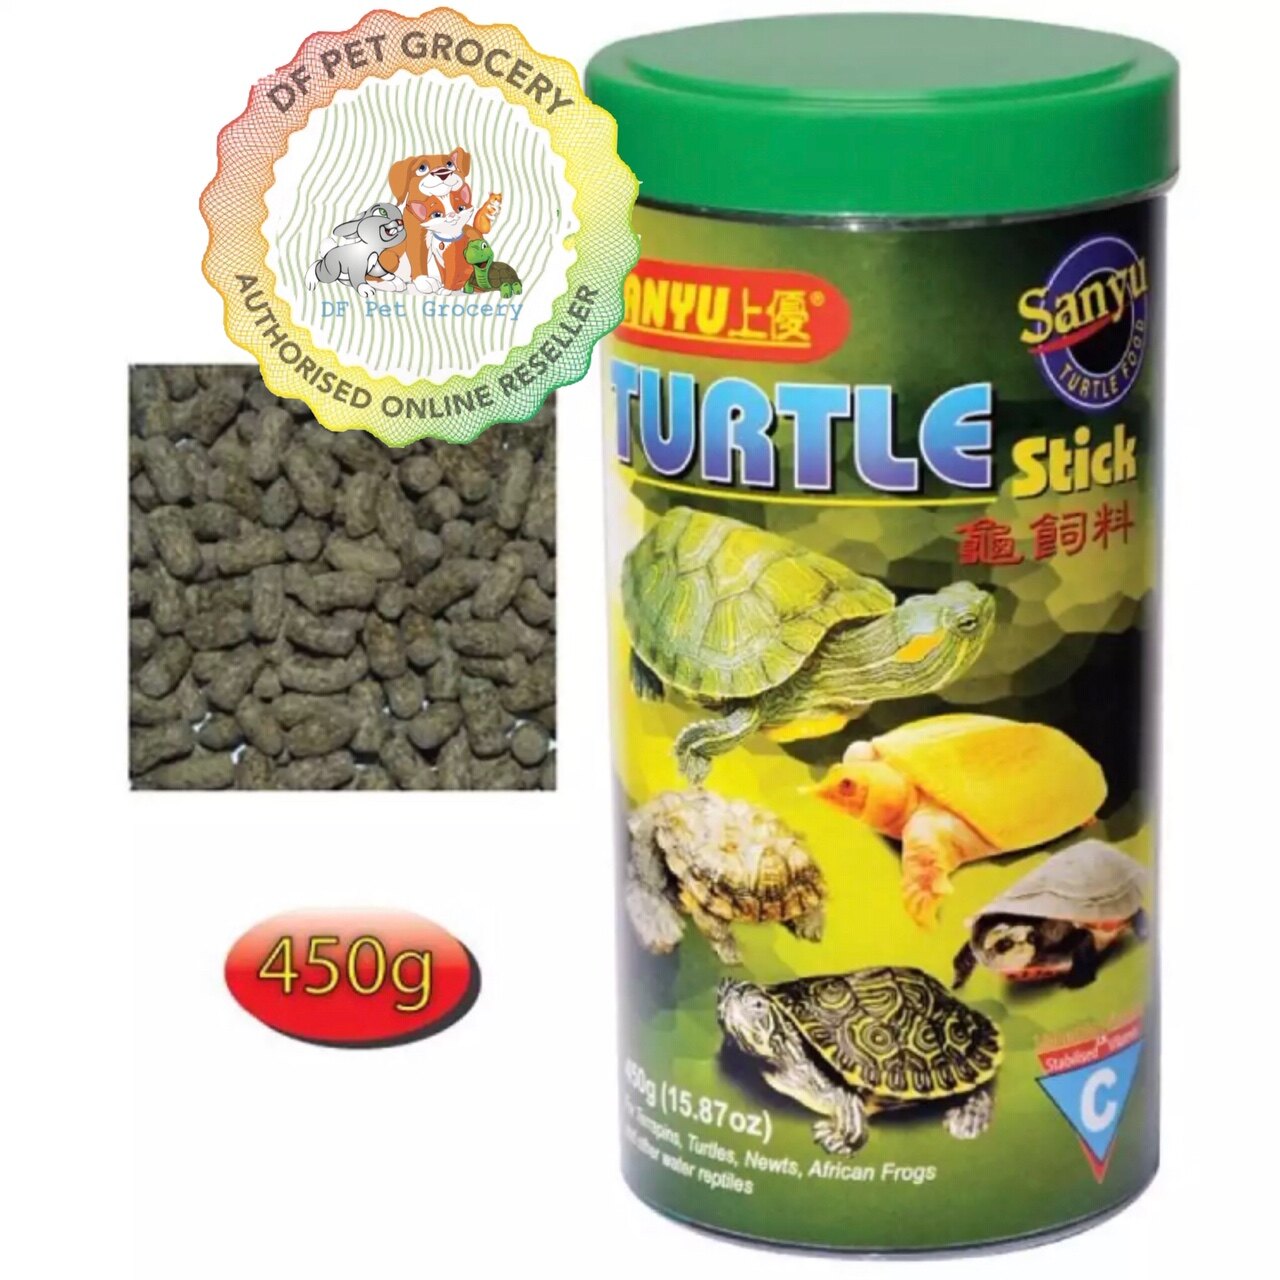 Sanyu Turtle stick 450g - Turtle Food - Makanan Kura - Kura dan Katak FF-749